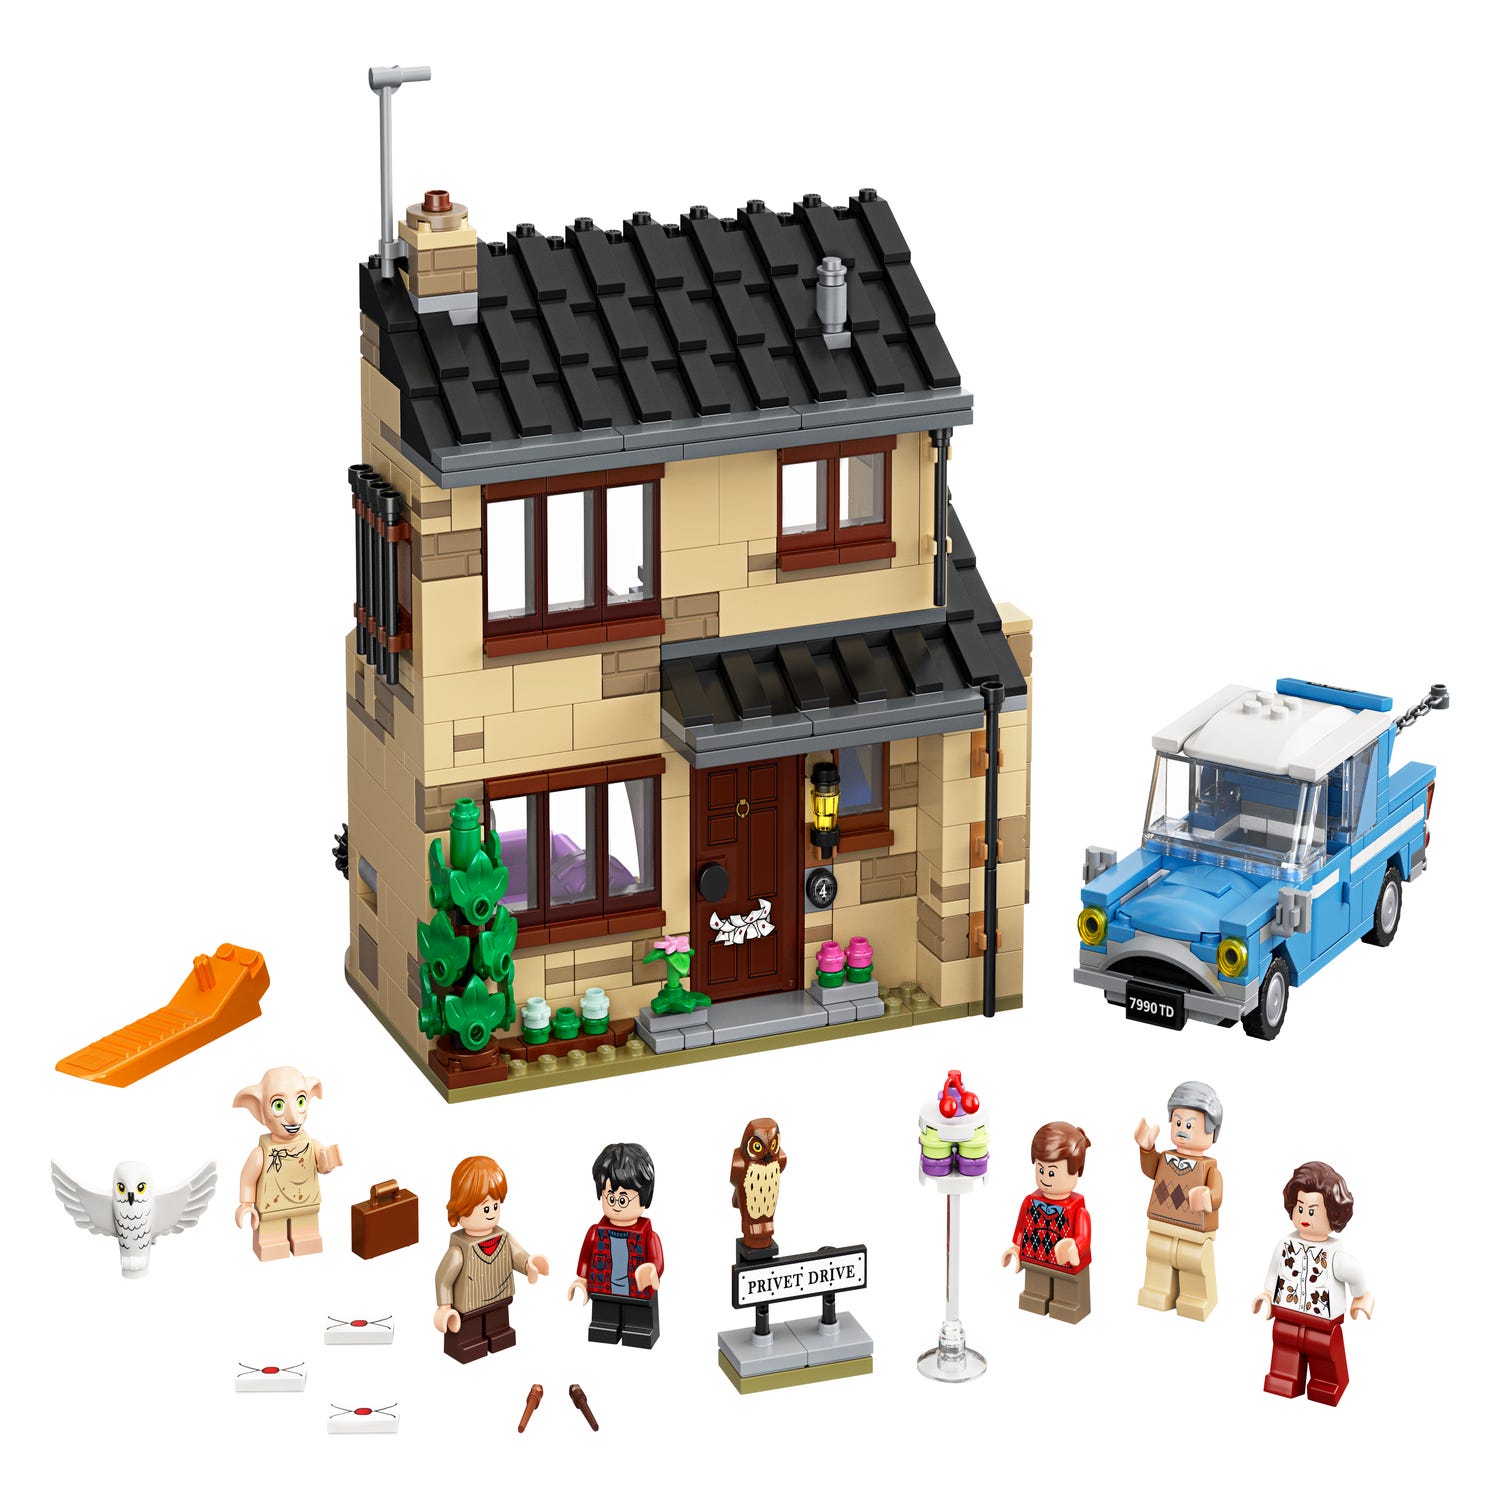 LEGO Privet Drive 4.